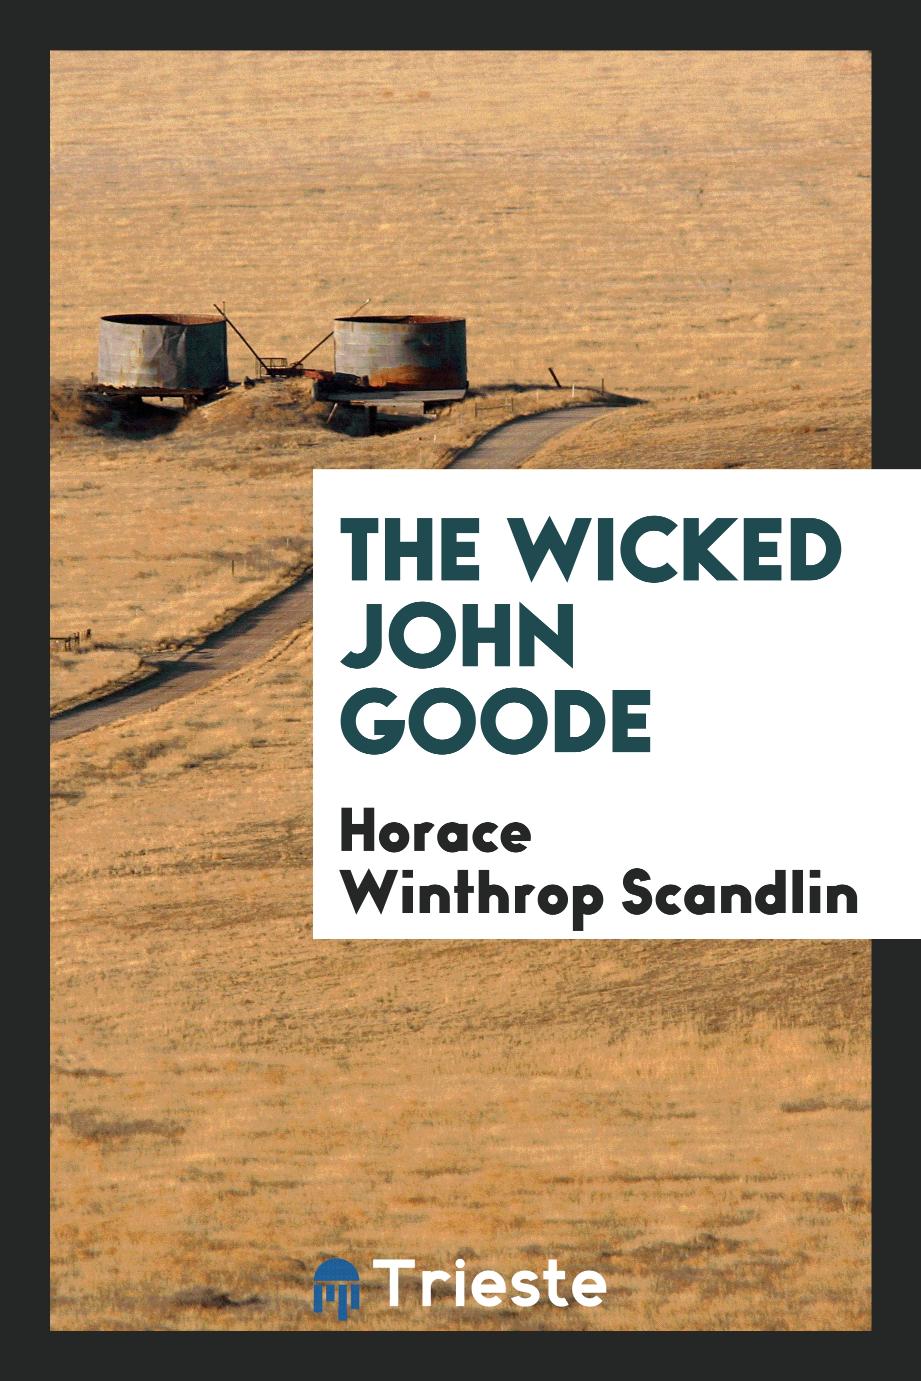 The wicked John Goode